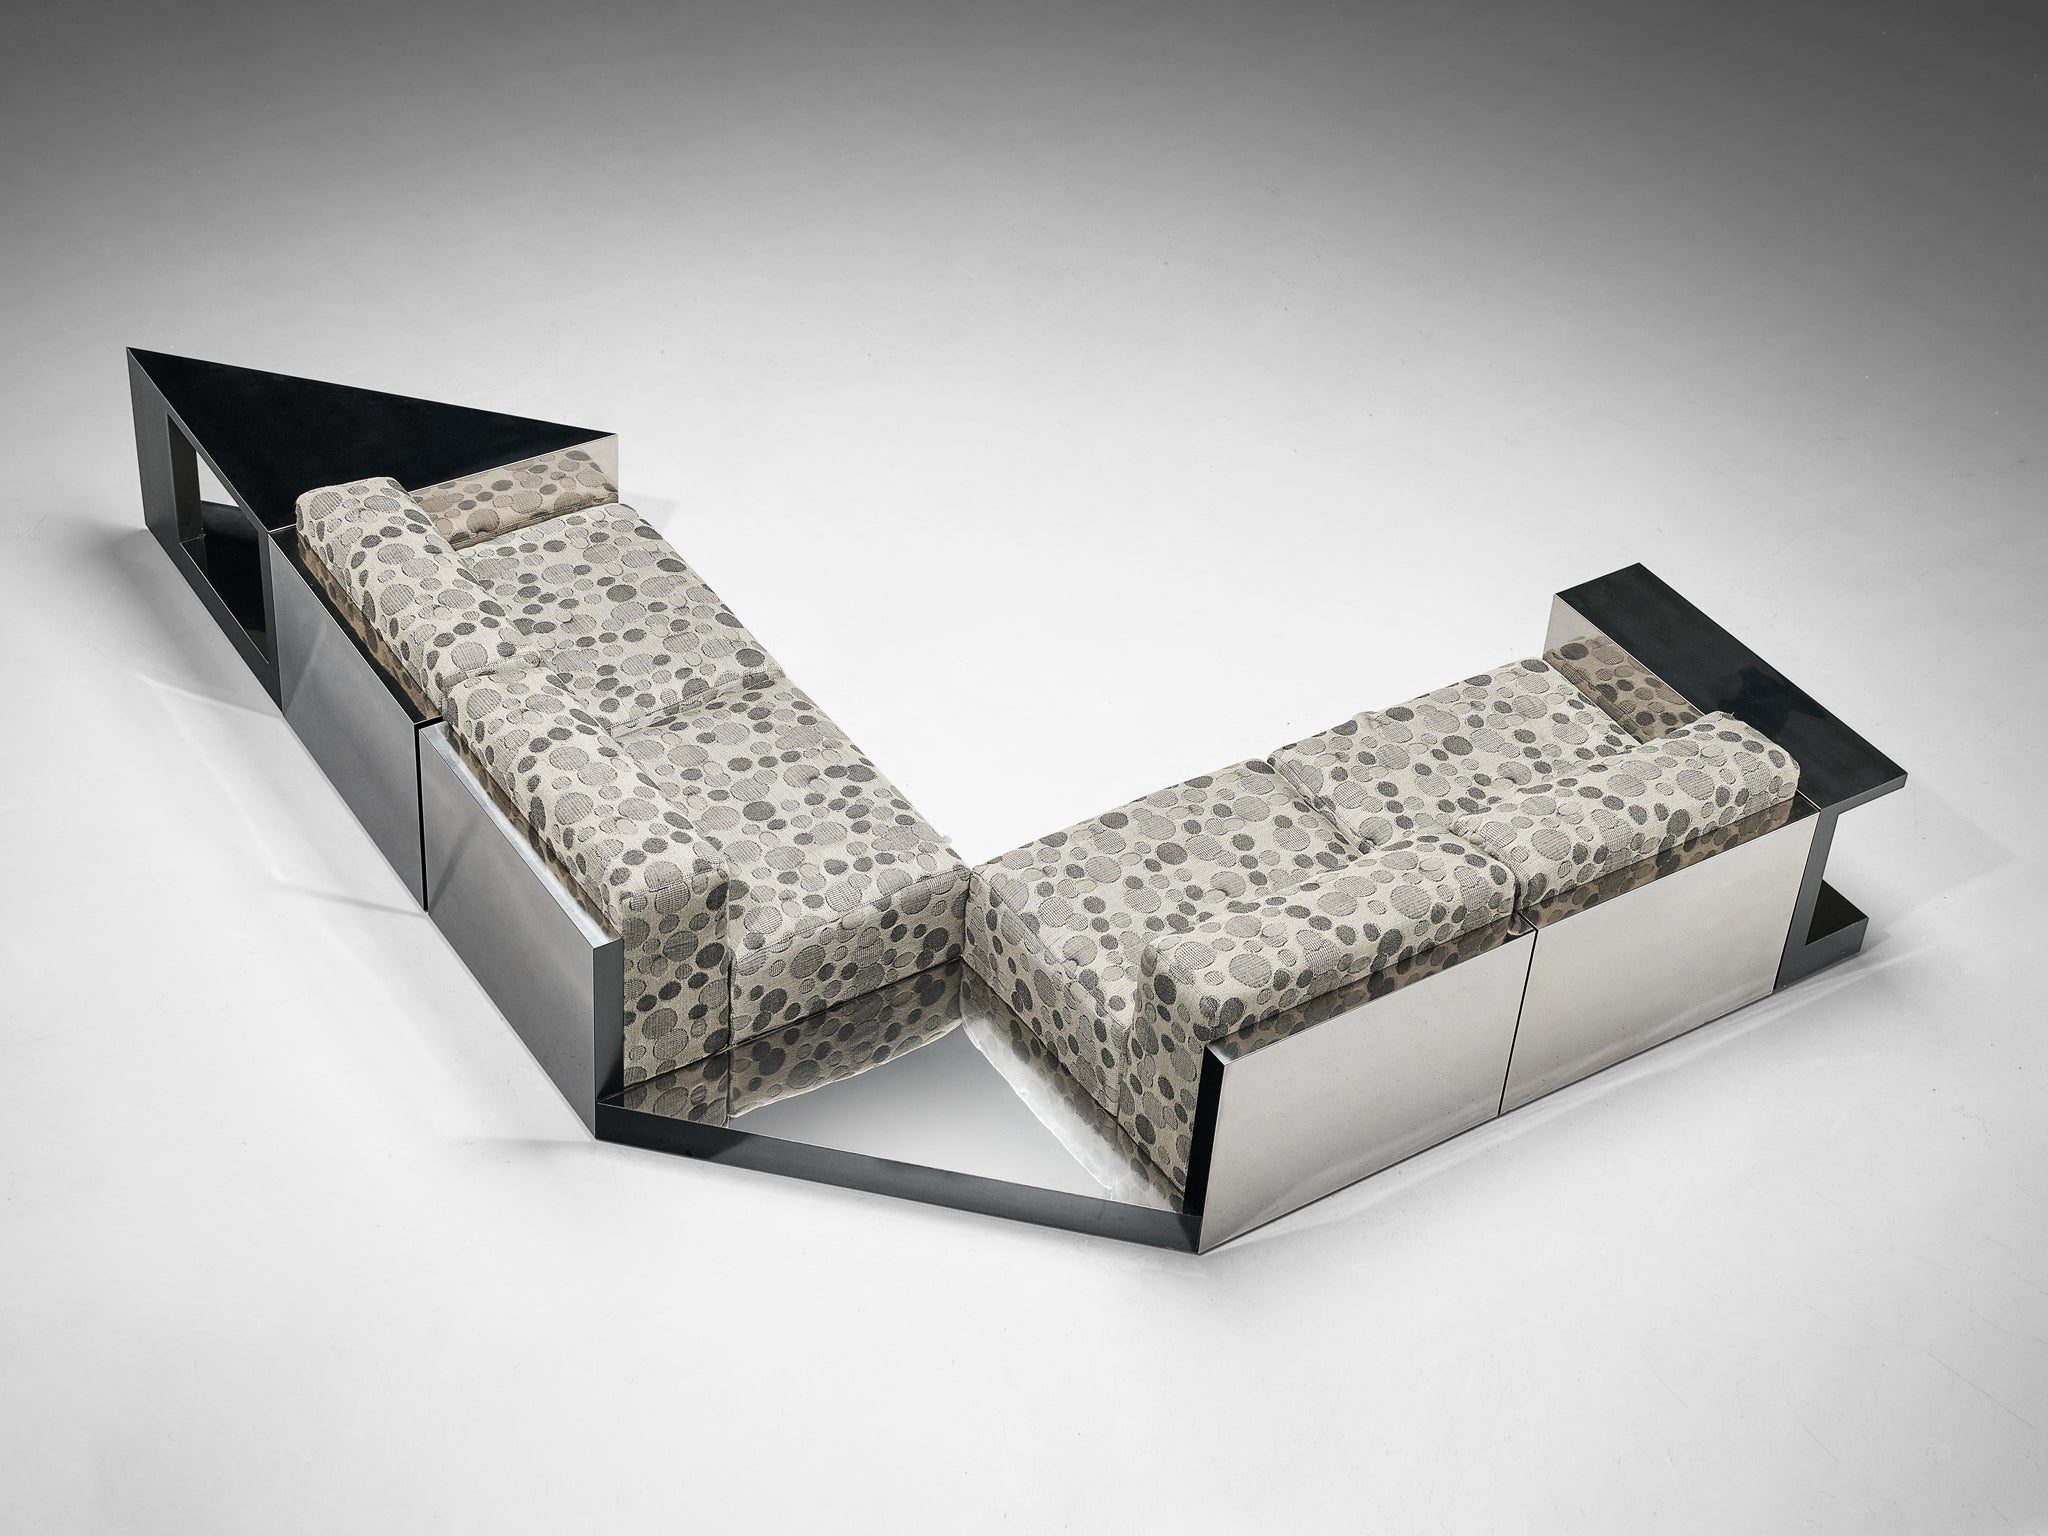 Italian Modular Sofa in Chrome and Dotted Grey Fabric